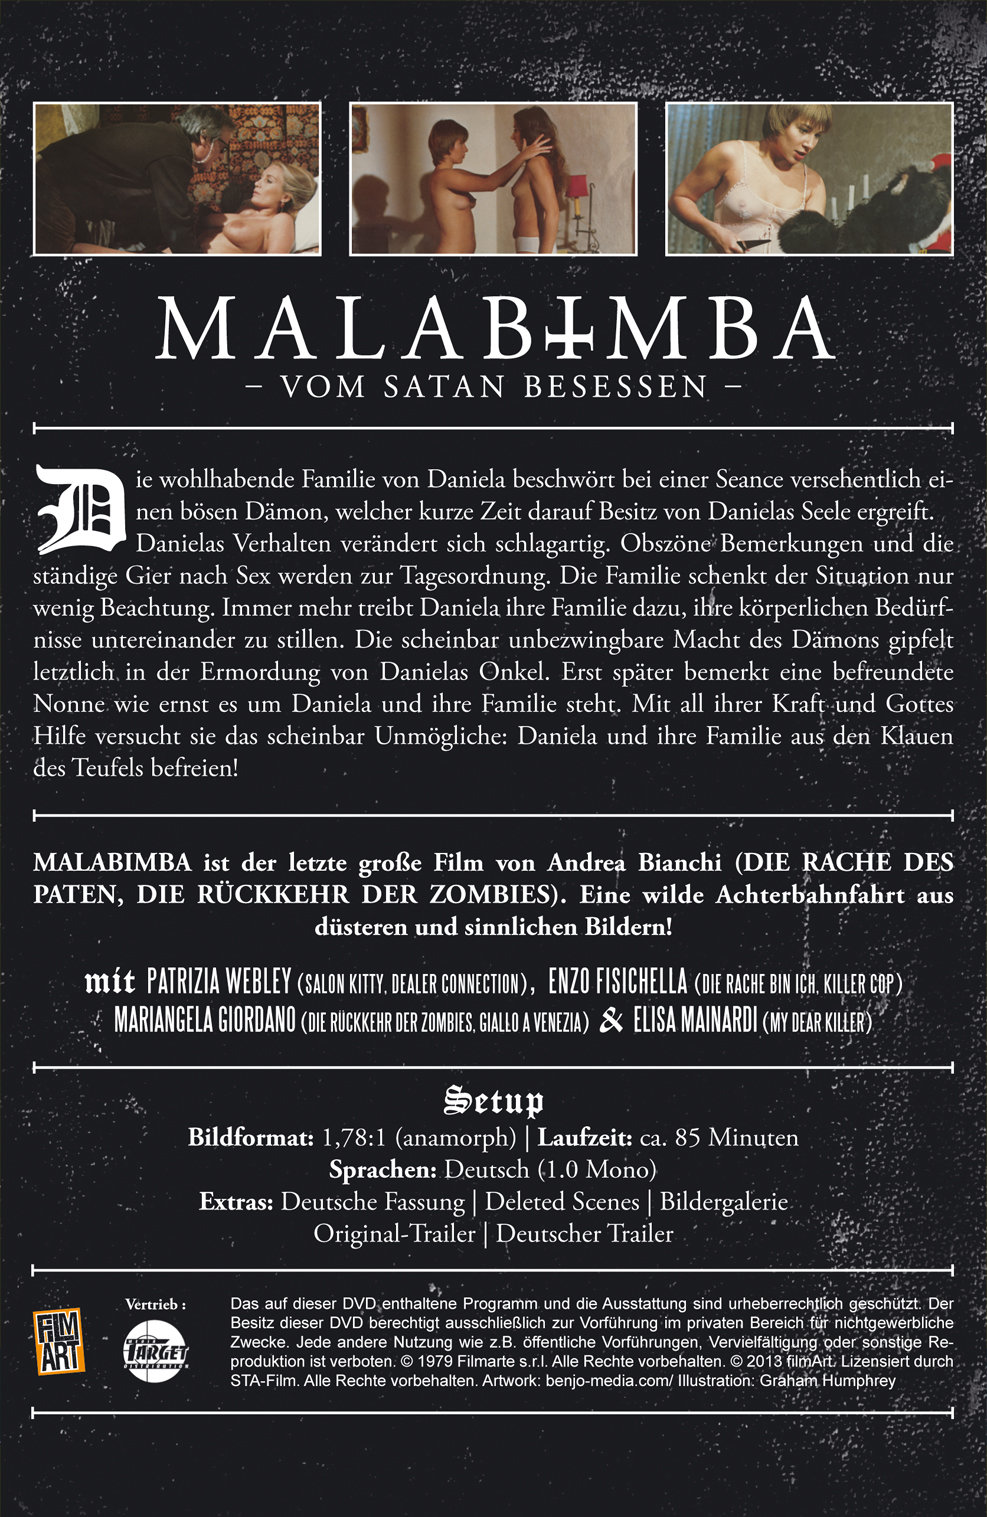 Malabimba - Vom Satan besessen - Uncut Hartbox Edition